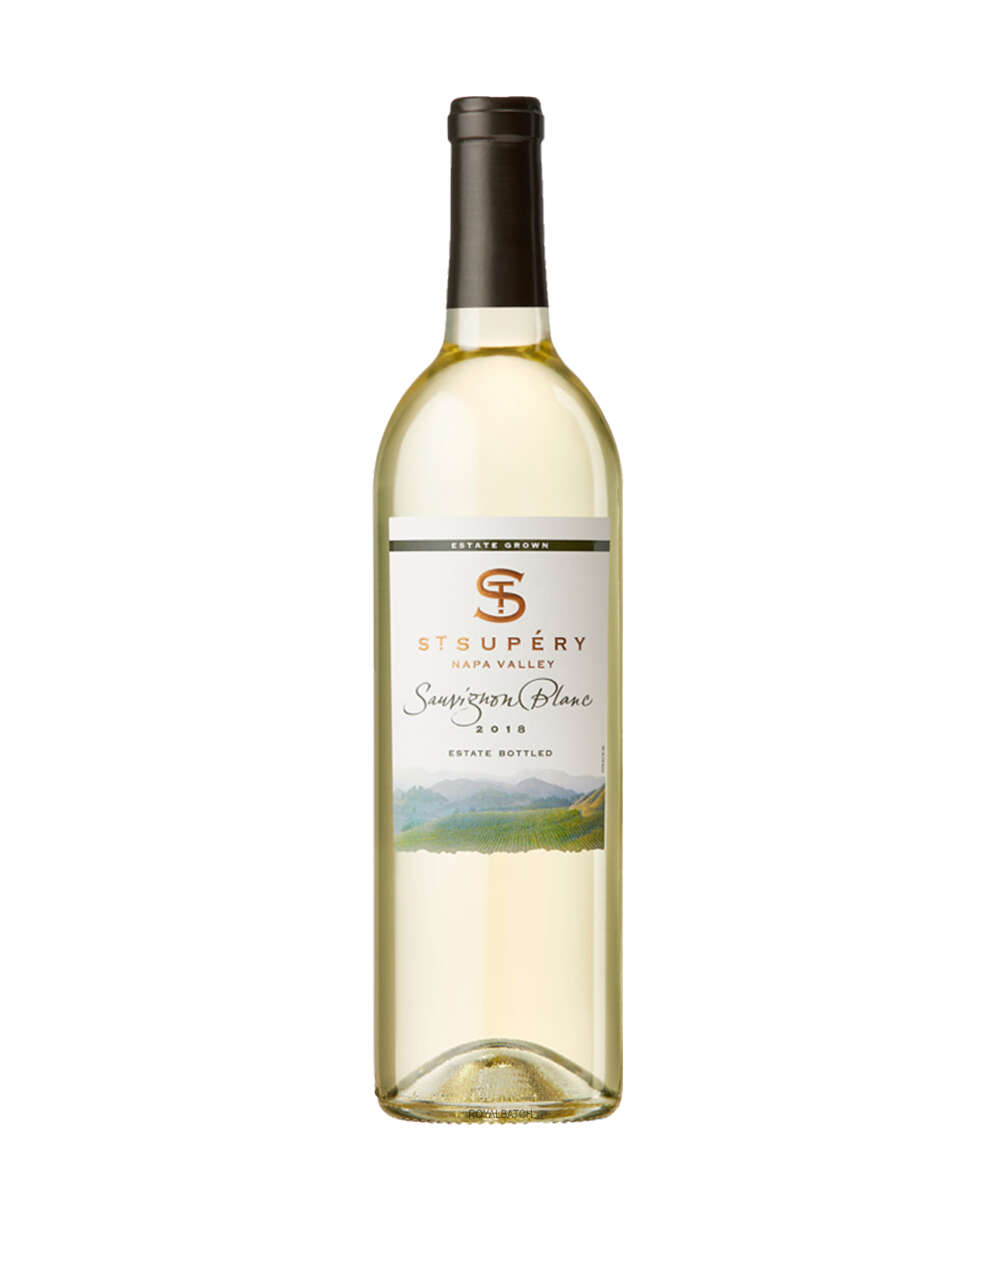 St Supery Napa Valley Sauvignon Blanc Wine 2022